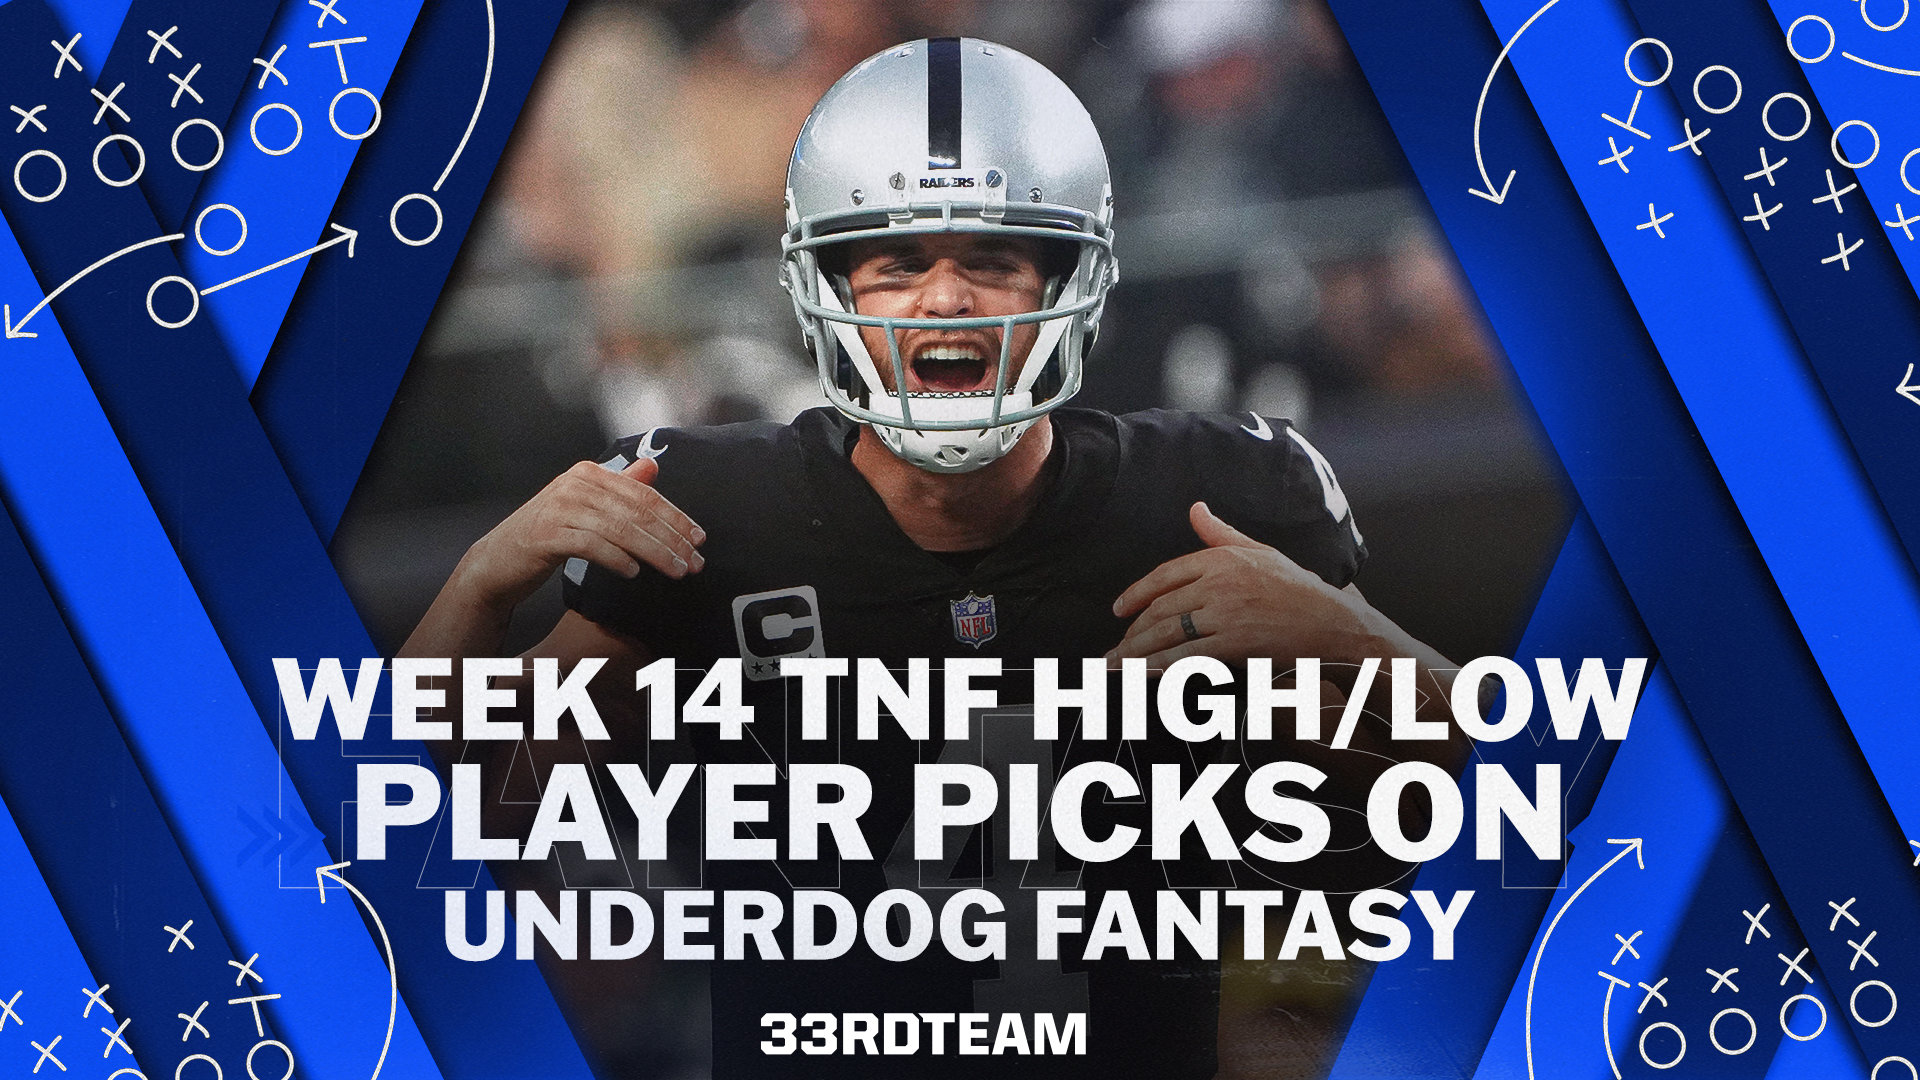 NFL Week 14 Underdog TNF High/Low Player Picks for Raiders vs. Rams